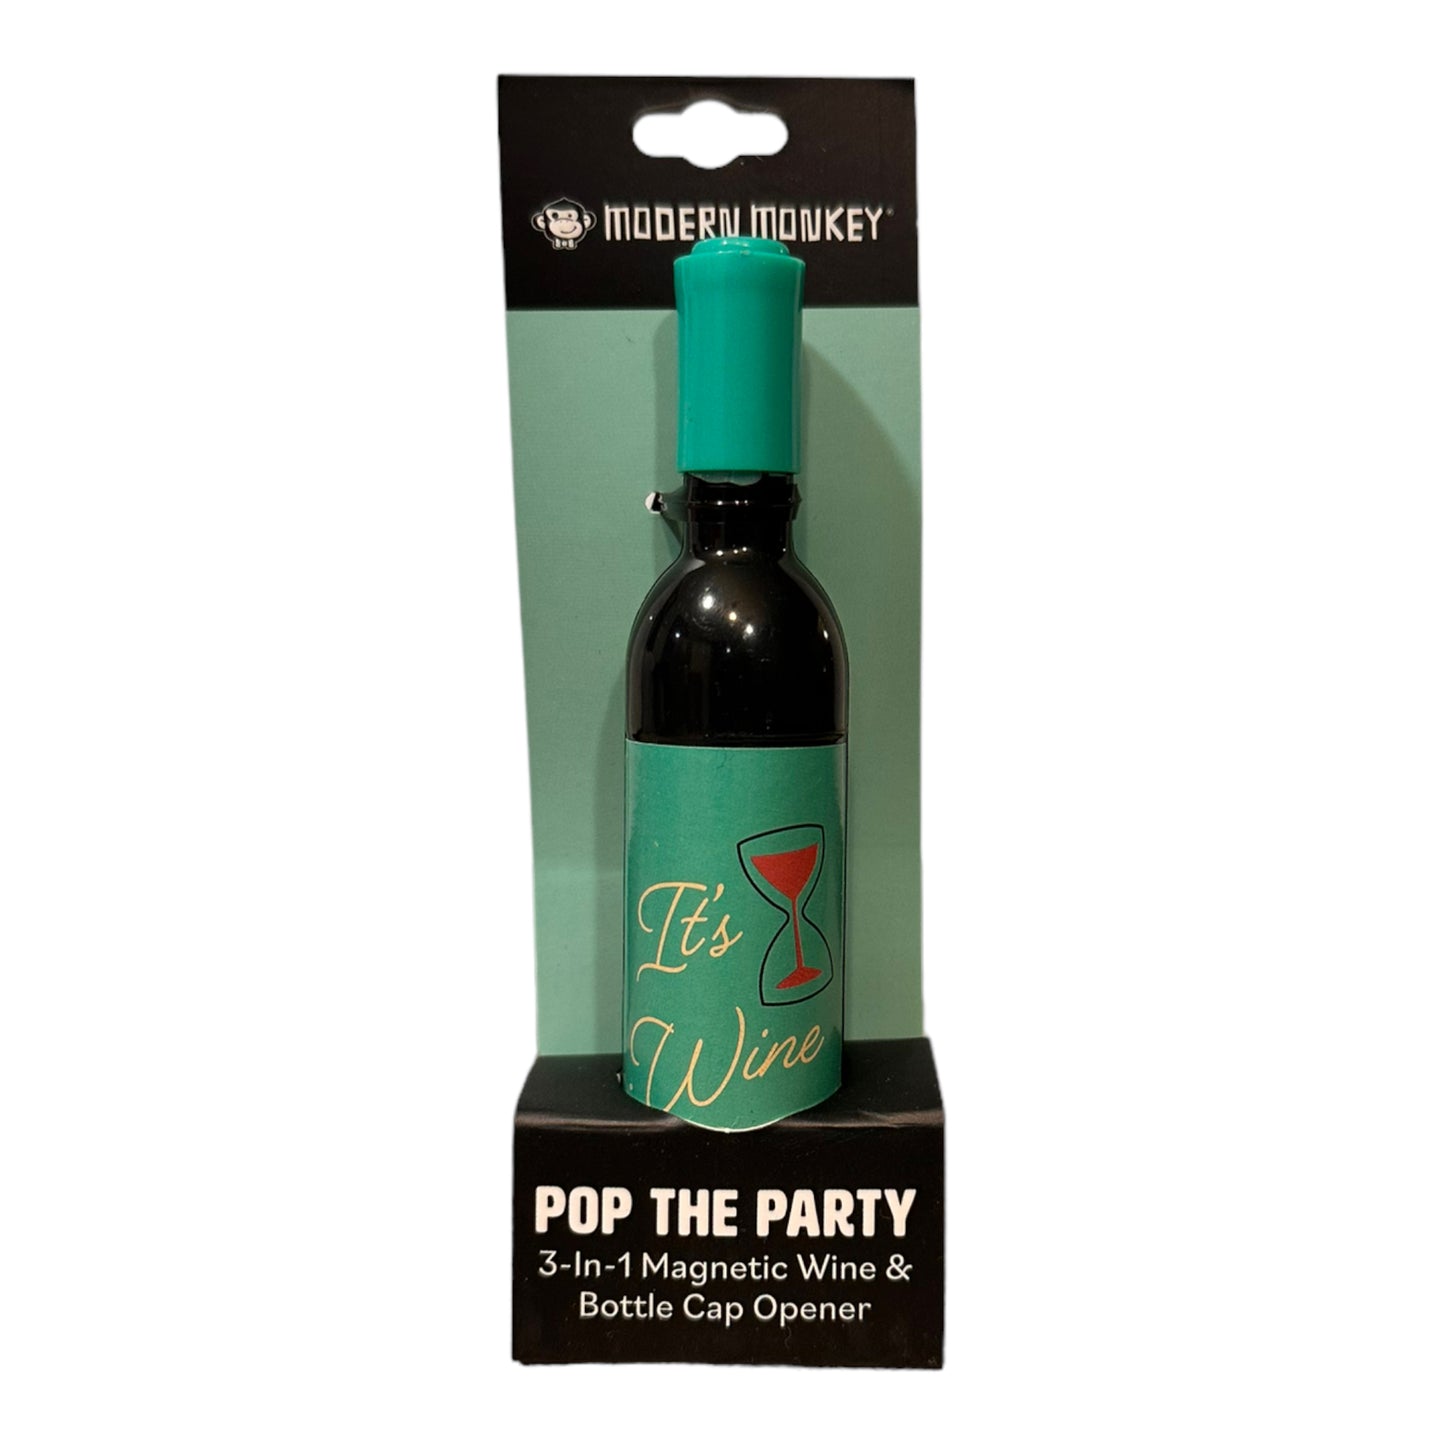 POP THE PARTY 3-in-1 MAGNETIC WINE & BOTTLE CAP OPENER